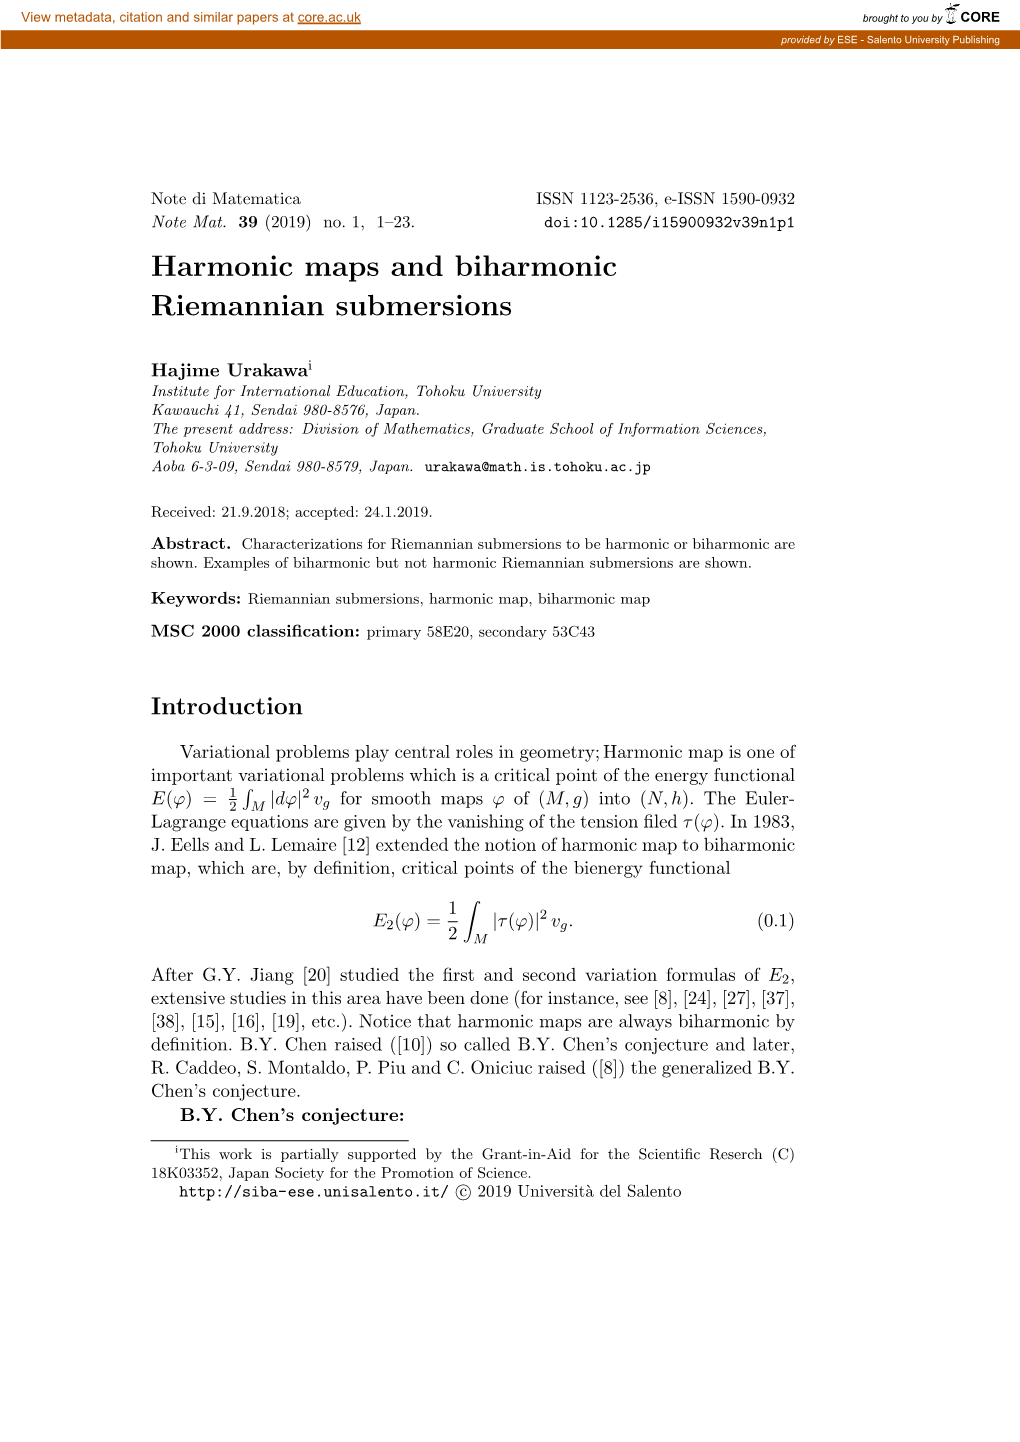 Harmonic Maps and Biharmonic Riemannian Submersions